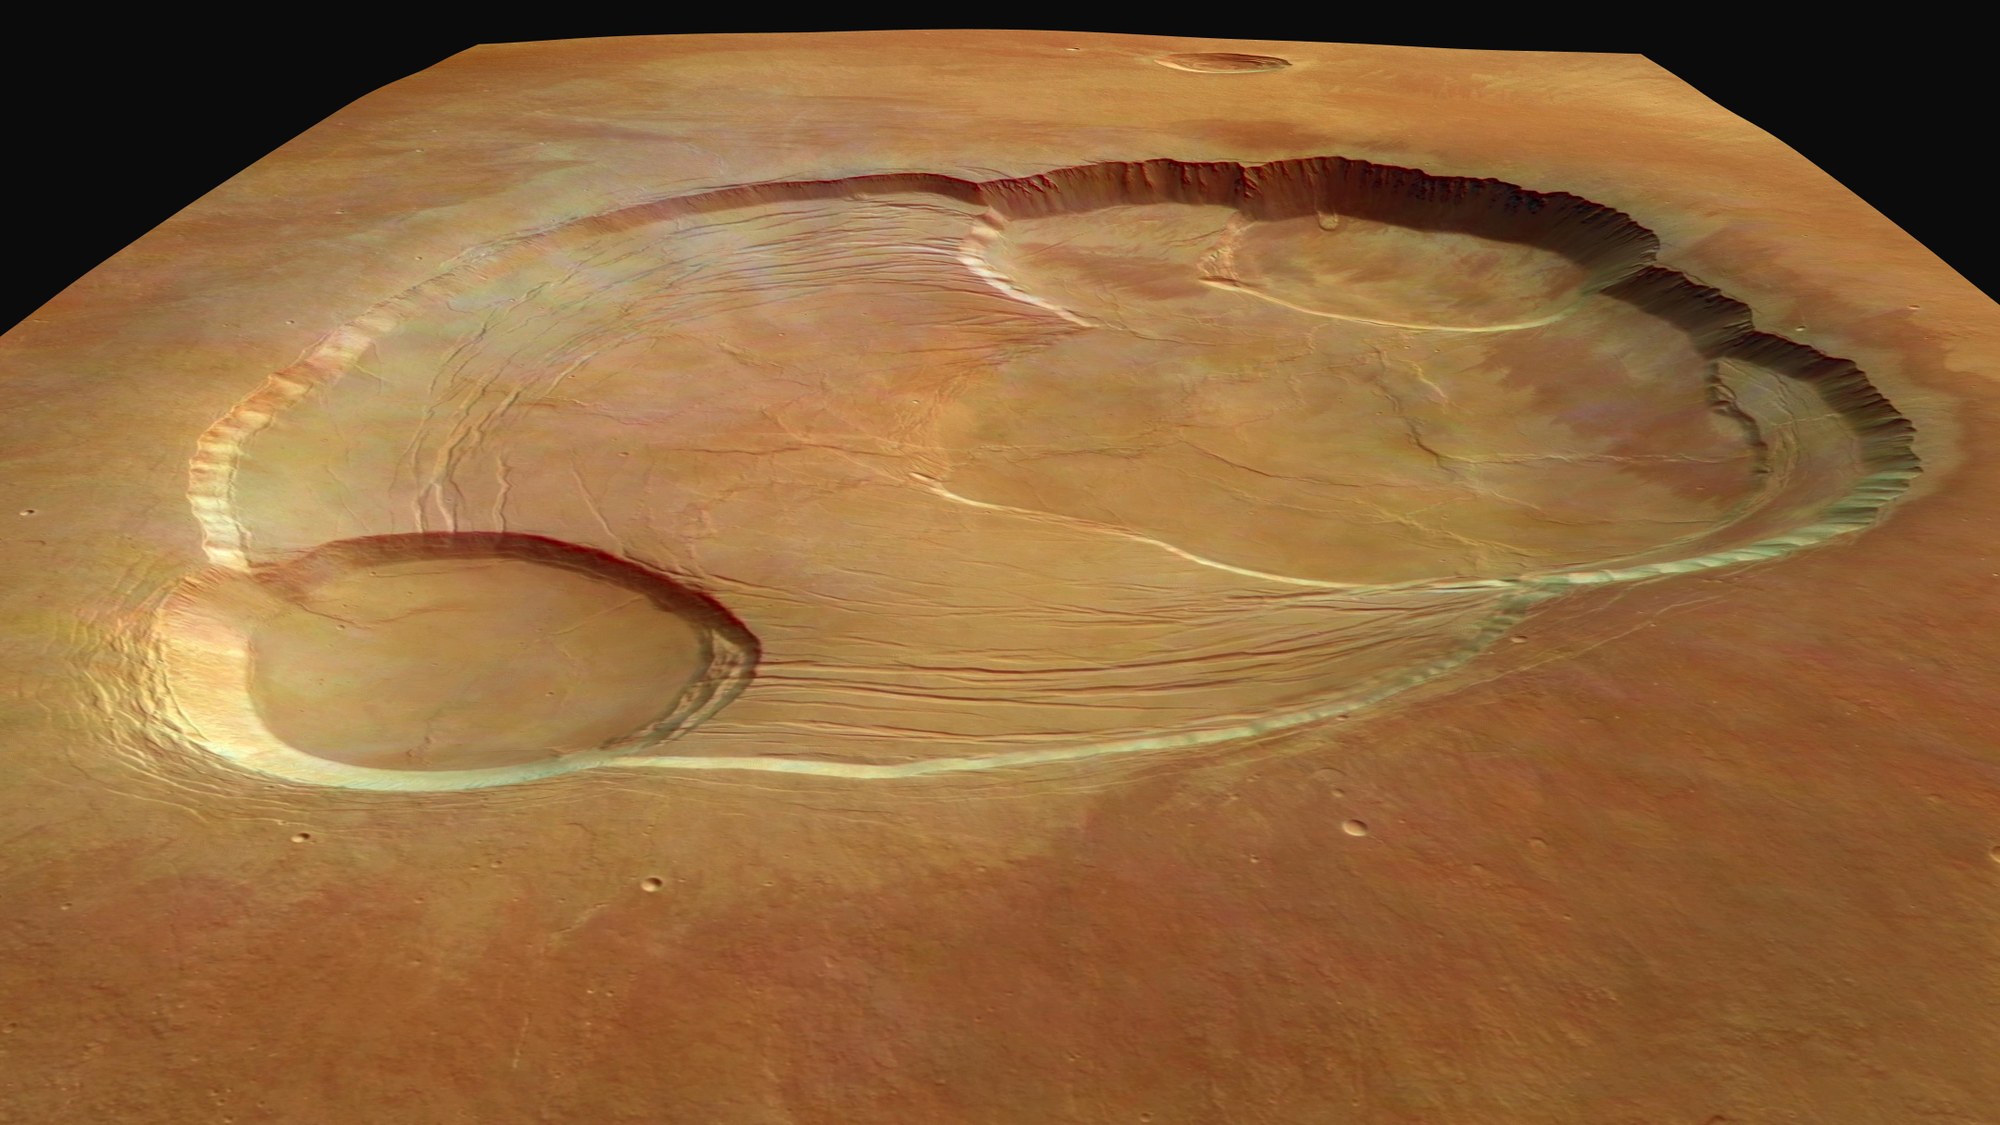 Caldera des Olympus Mons